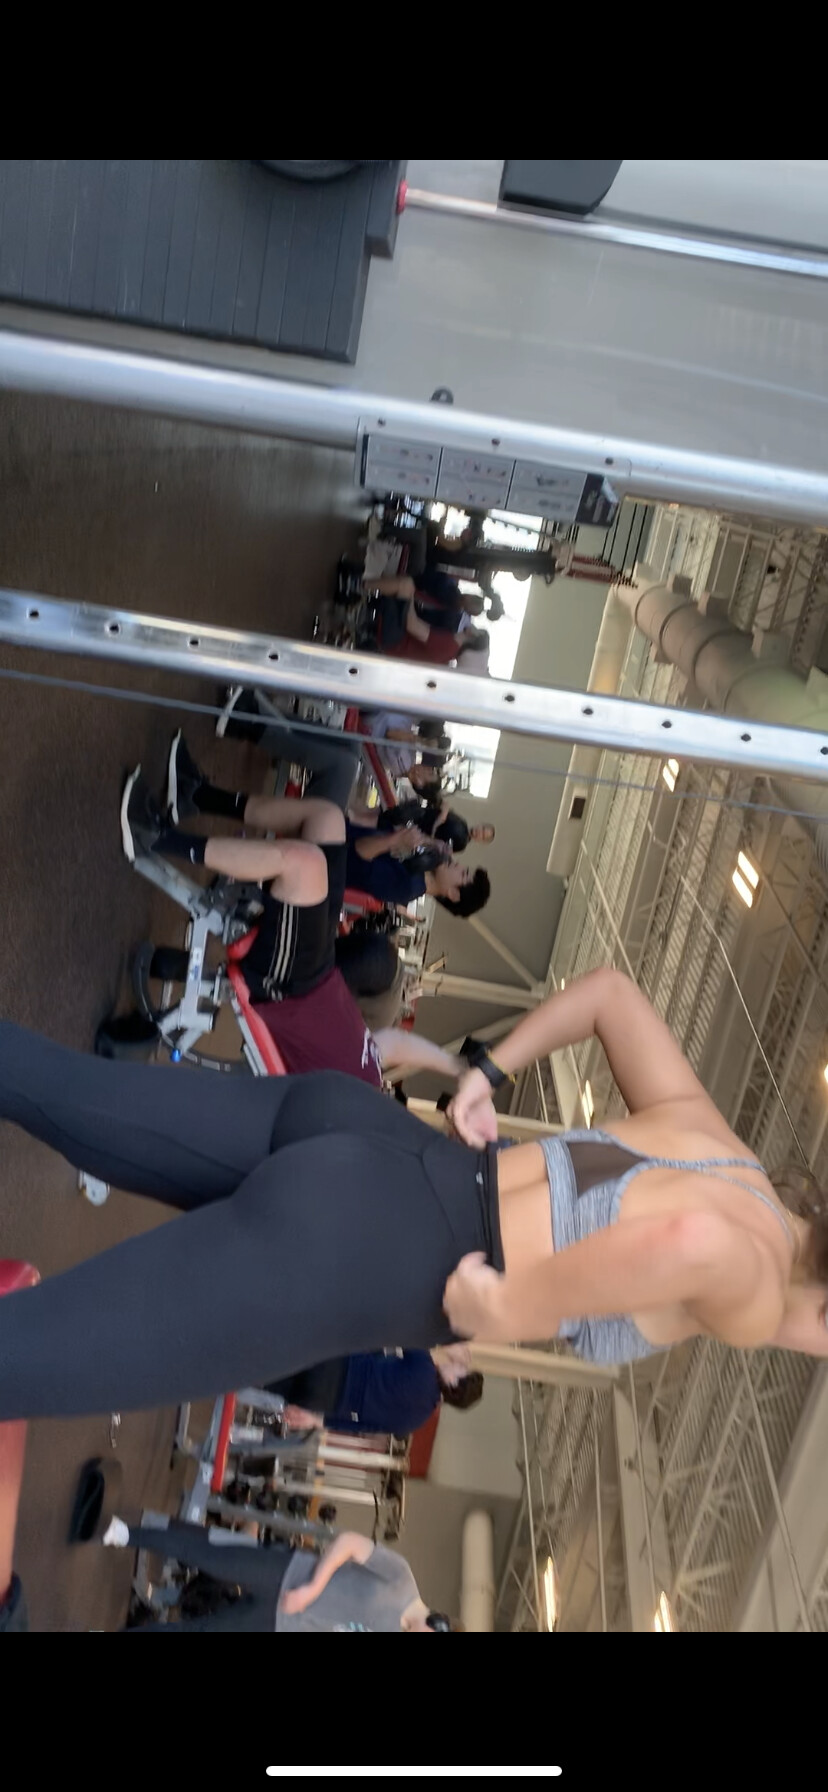 Gym college ass in see through leggings, OC - Forum